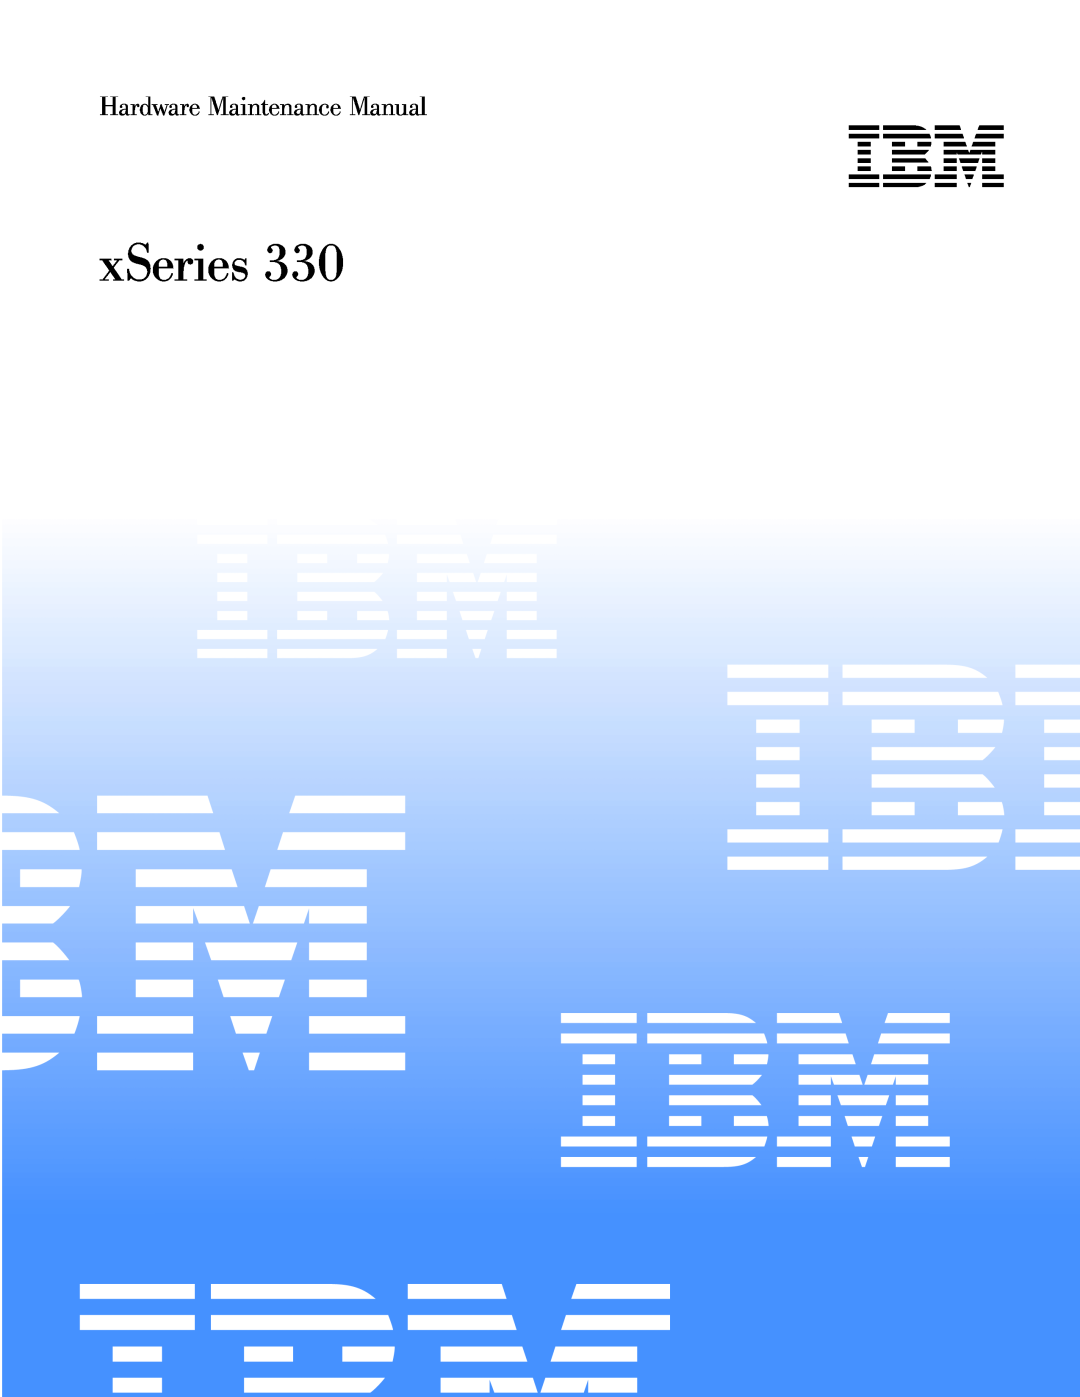 IBM xSeries 330 manual Hardware Maintenance Manual 